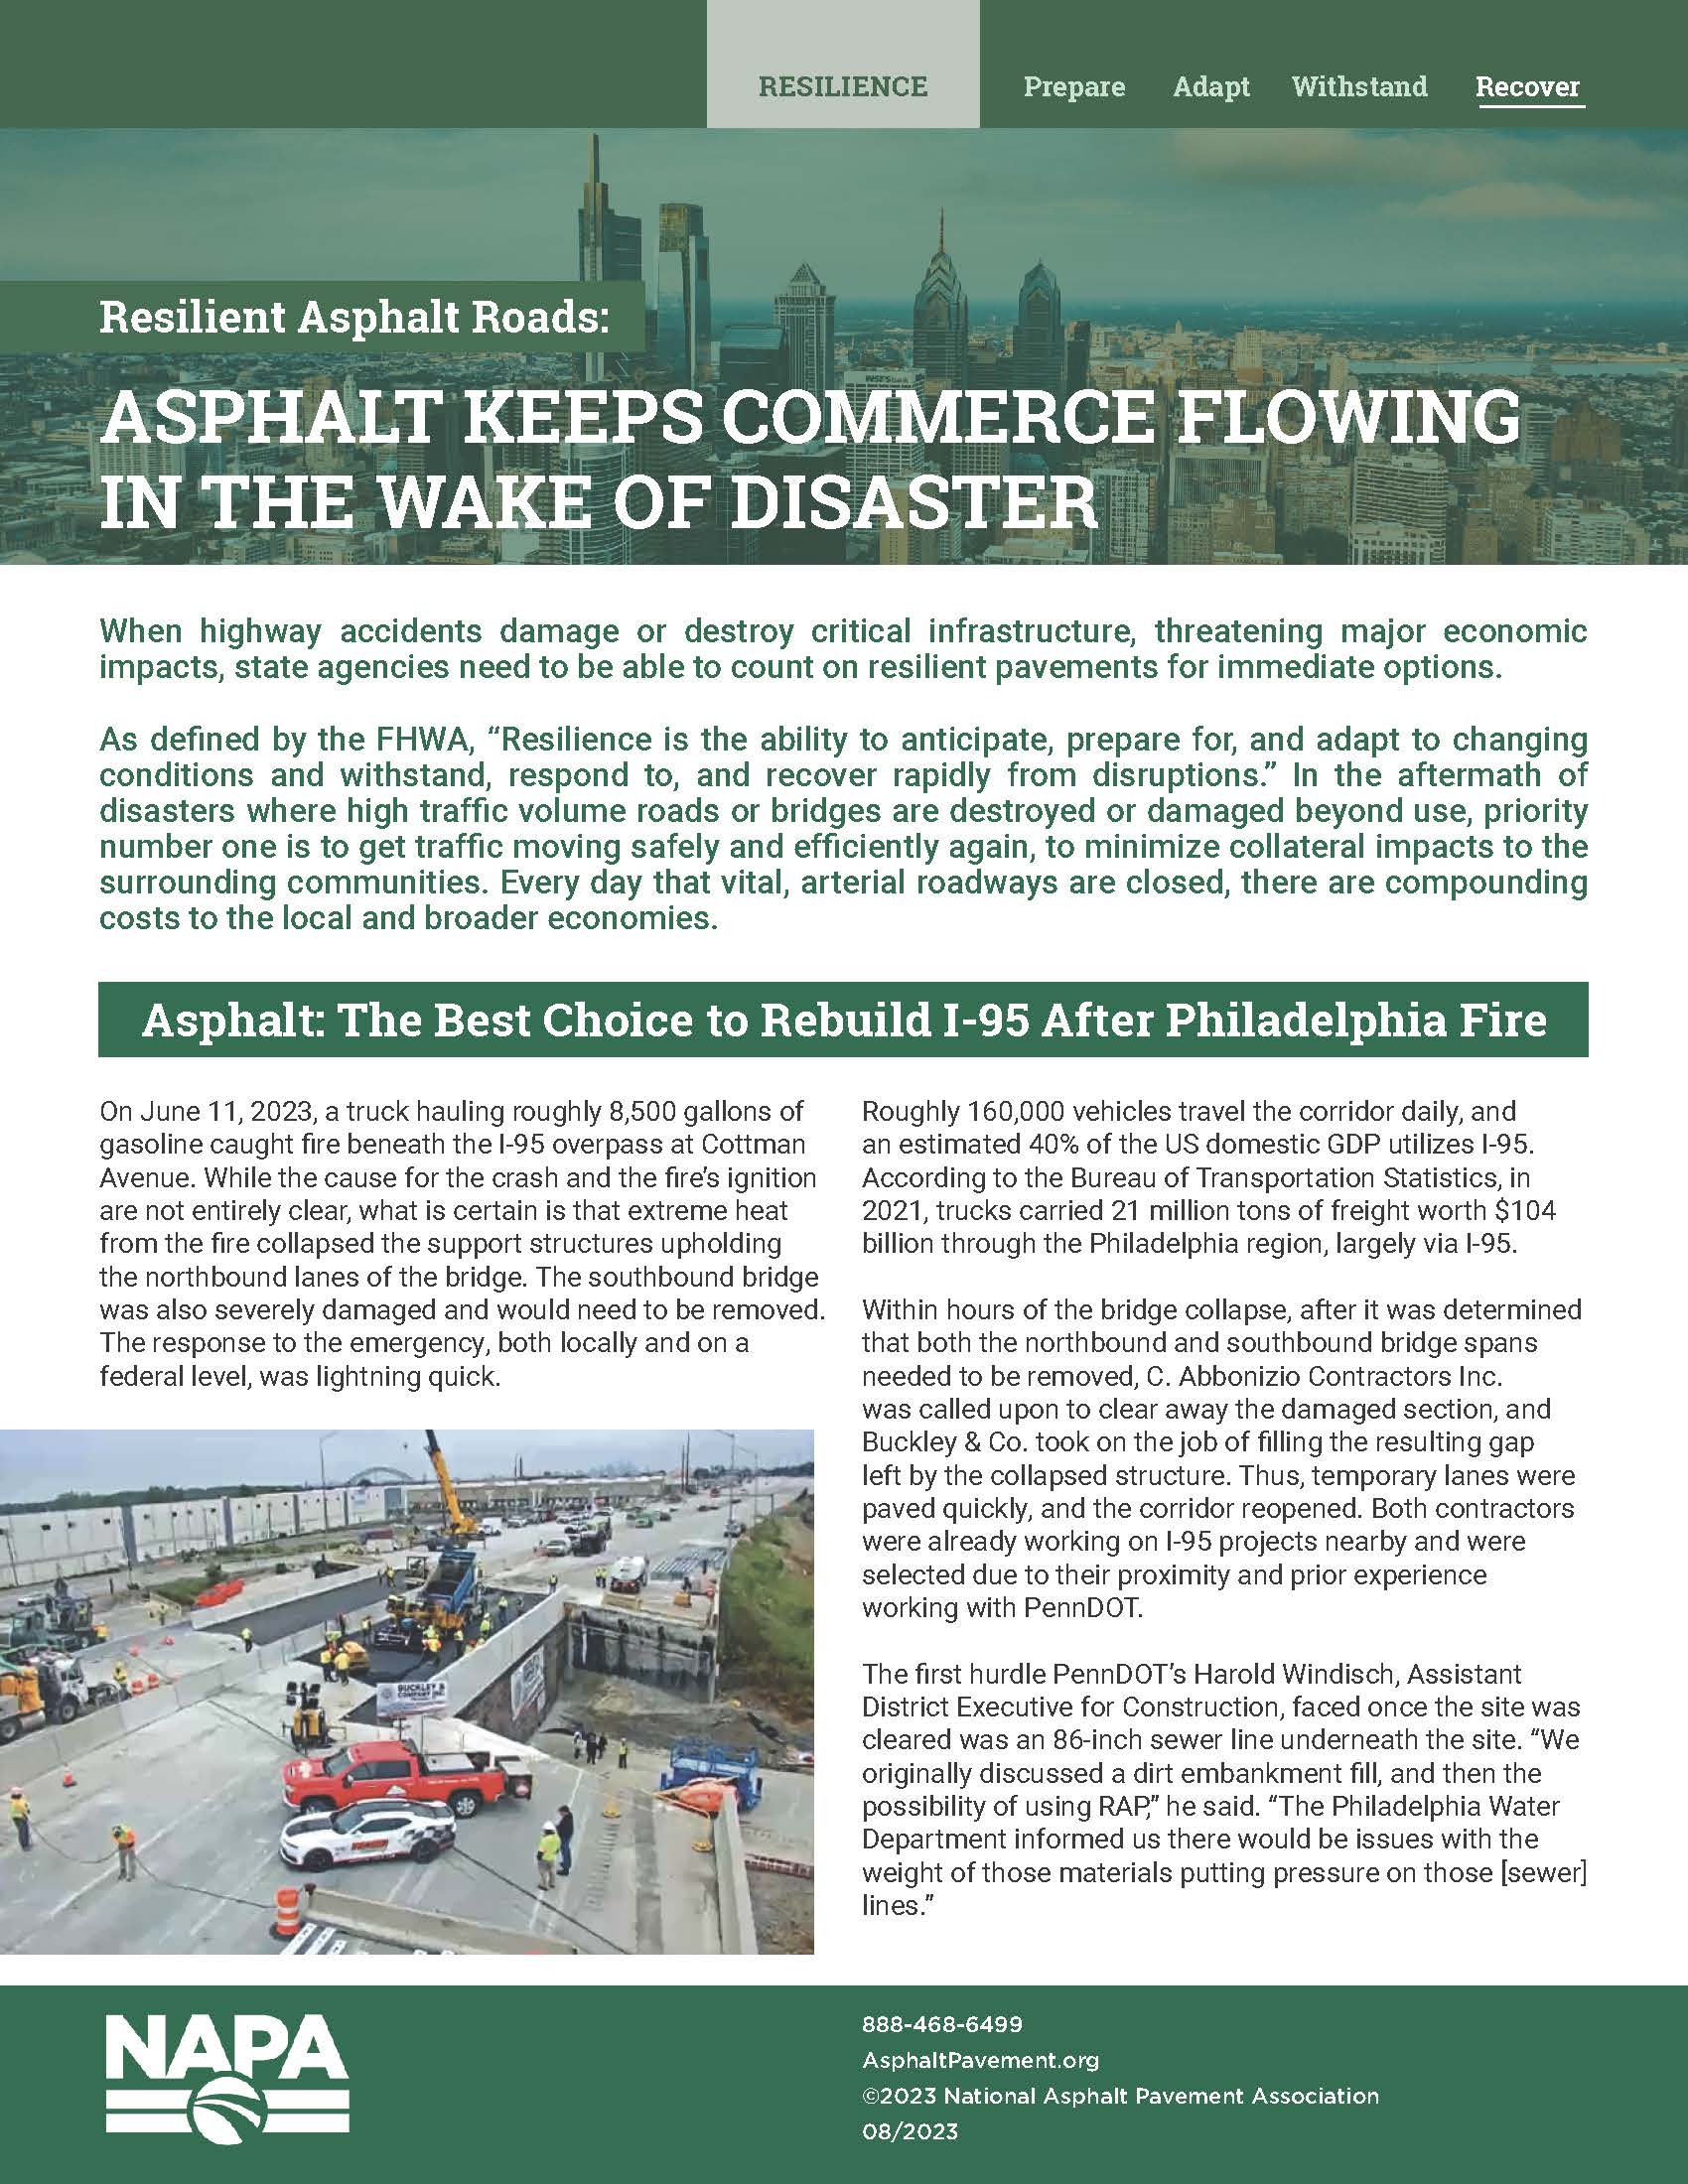 Asphalt Keeps Commerce Flowing in the Wake of Disaster